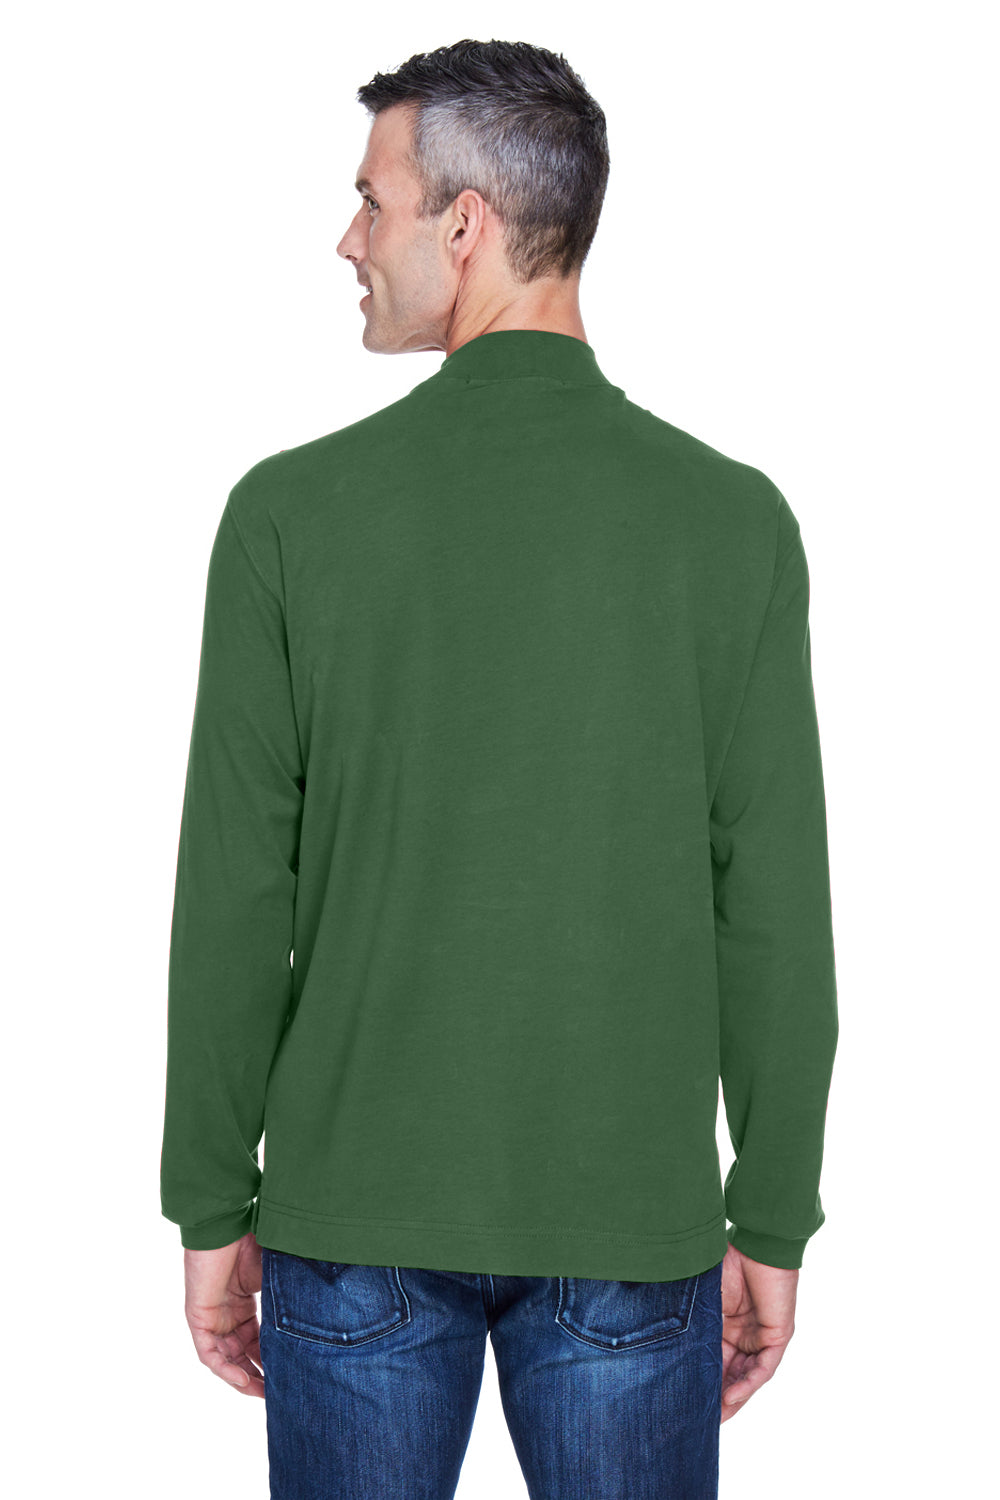 Devon & Jones D420 Mens Sueded Jersey Long Sleeve Mock Neck T-Shirt Forest Green Back